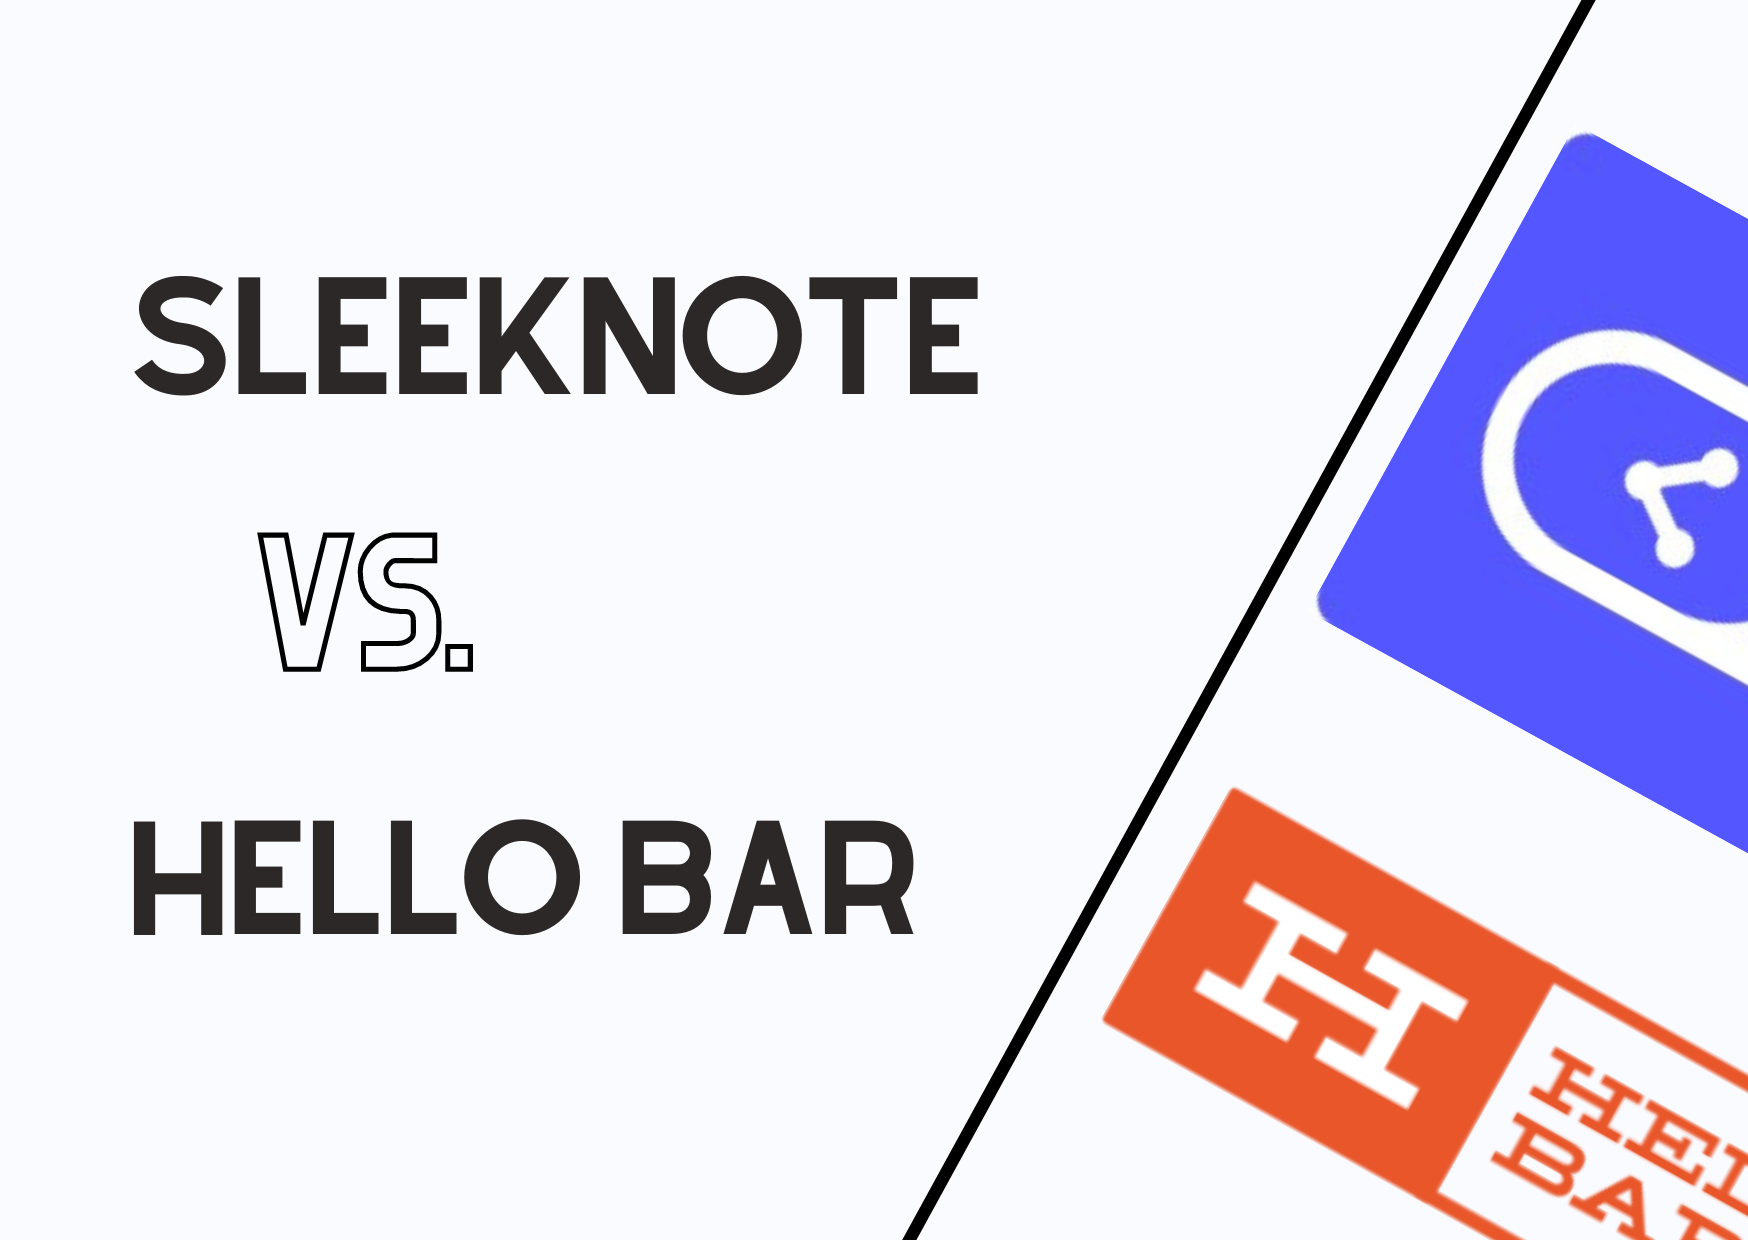 Sleeknote and Hello Bar comparison image